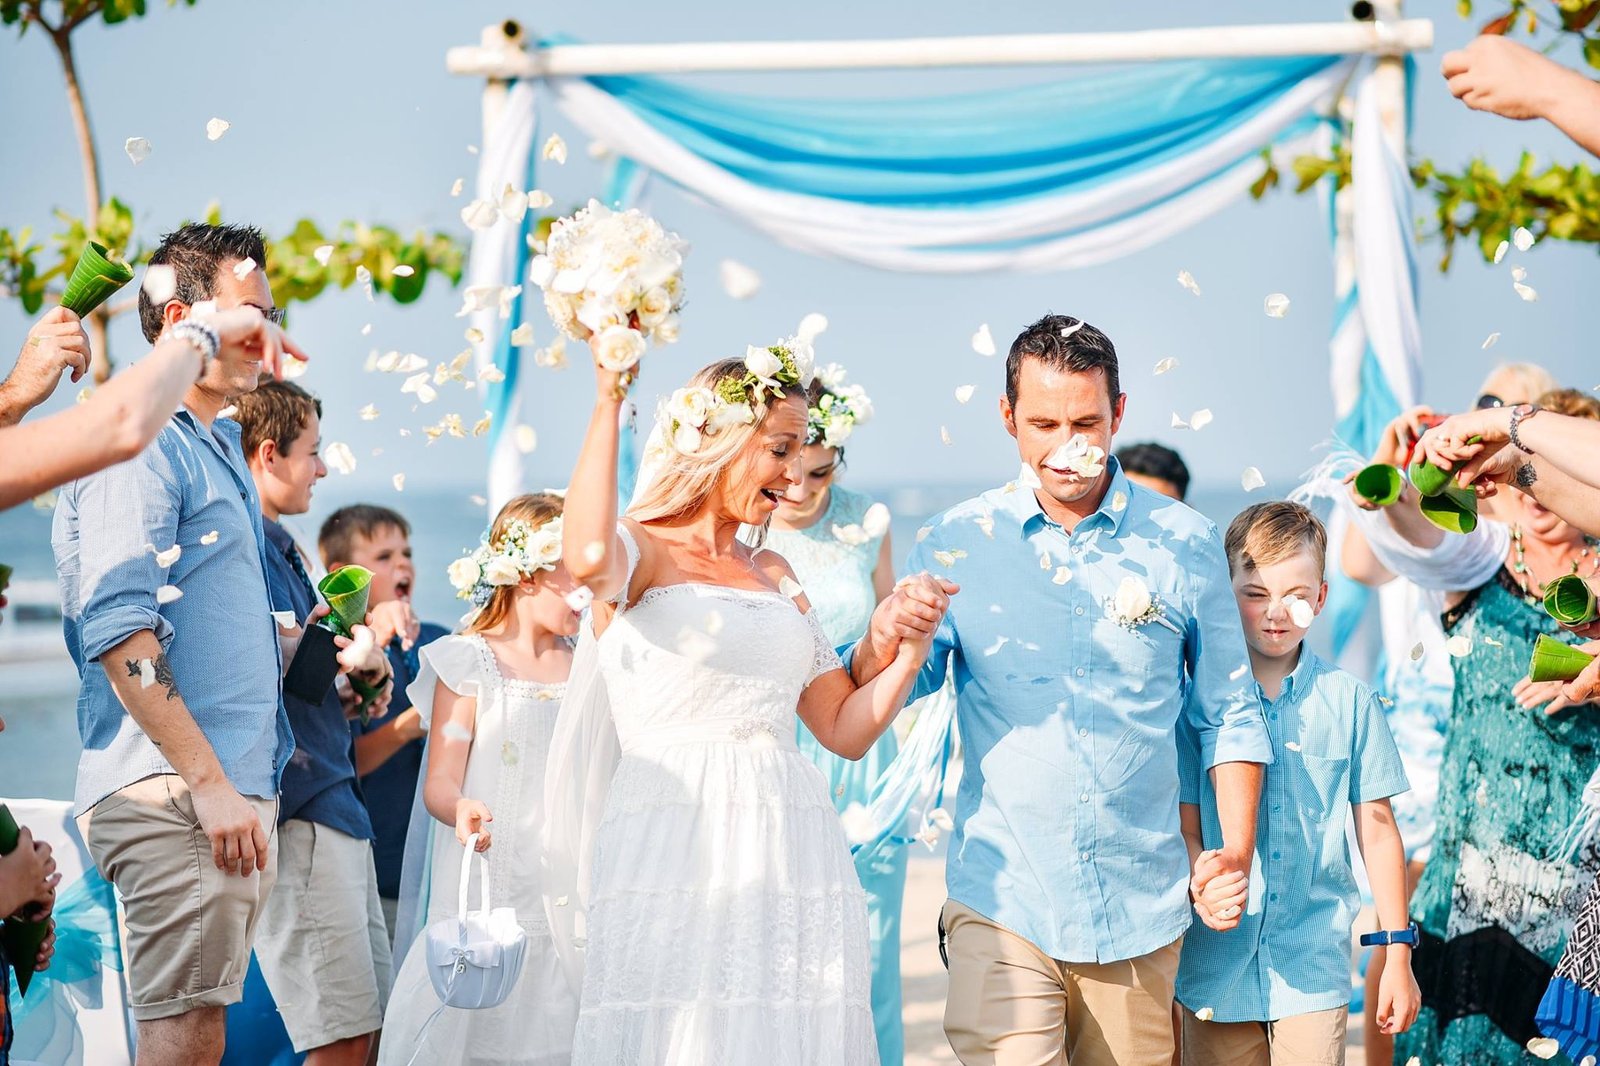 2 Most Preferred Wedding Venues By Most Brides In Bali